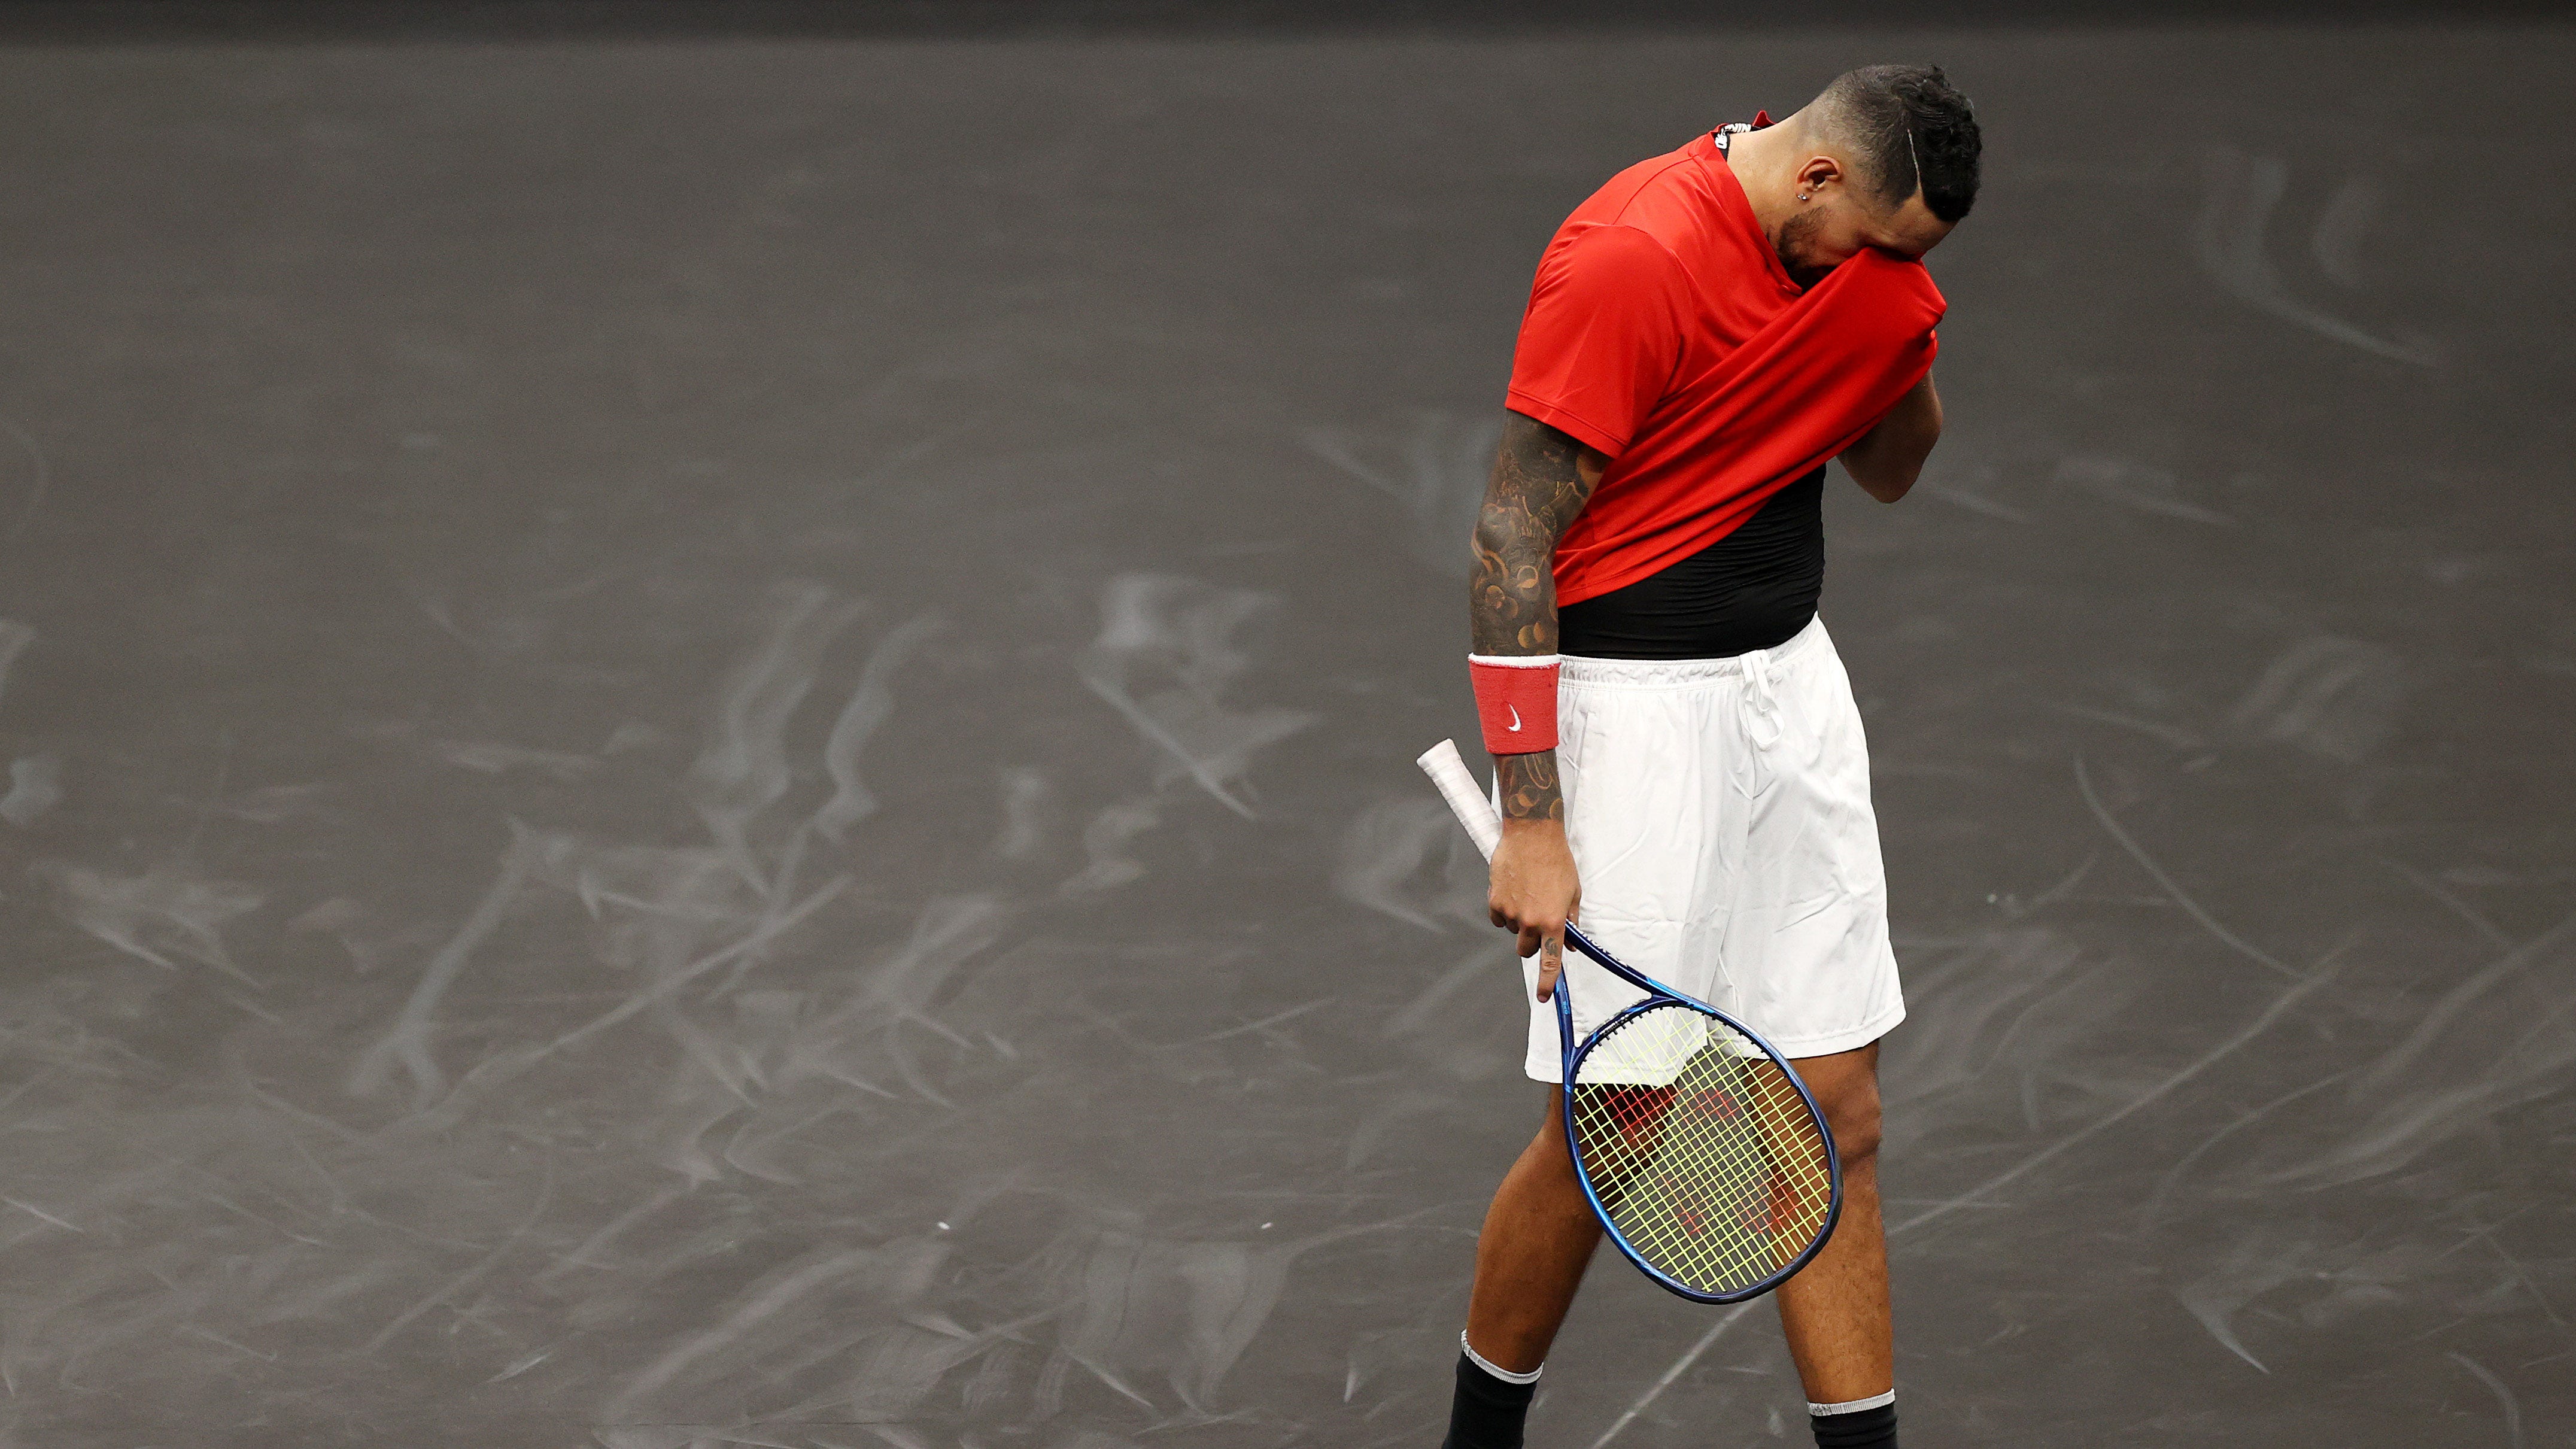 Australian tennis pro Nick Kyrgios ’embarrassed’ over handling of Novak Djokovic visa situation